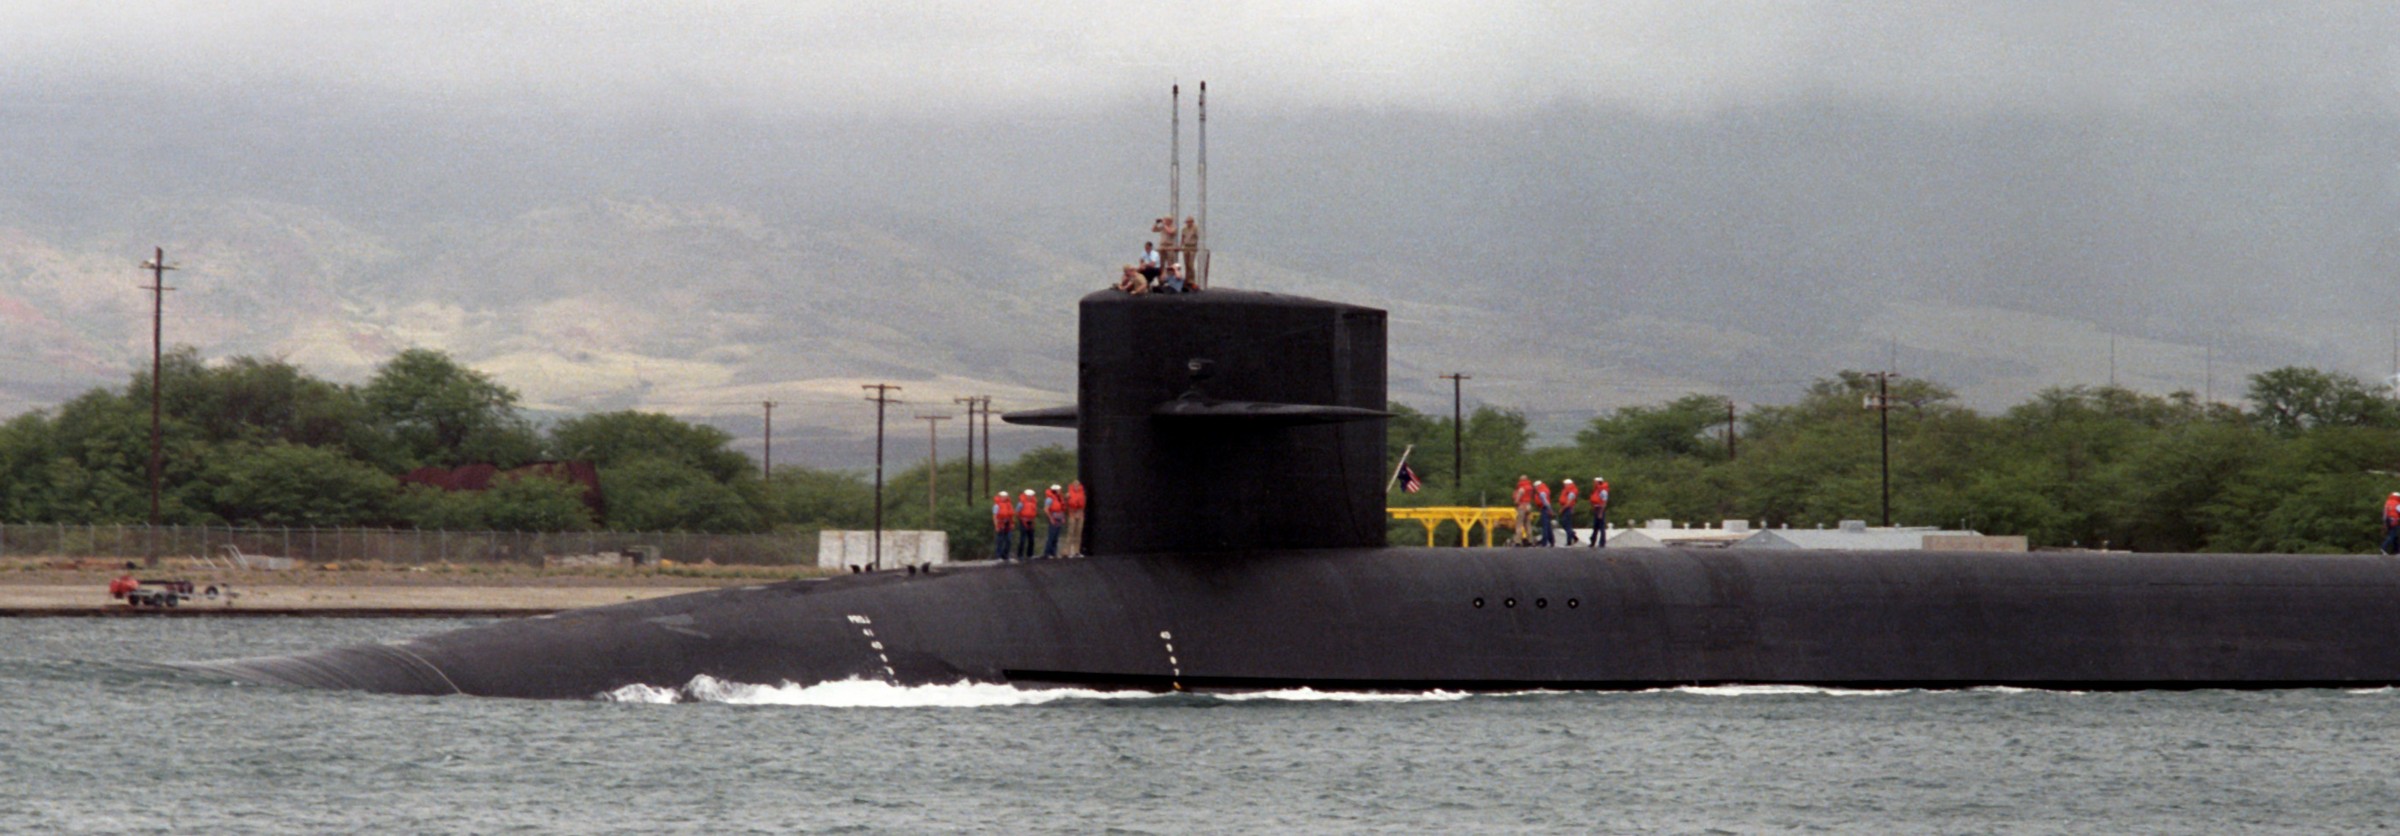 ssbn-726 uss ohio ballistic missile submarine us navy 1986 57 exercise rimpac